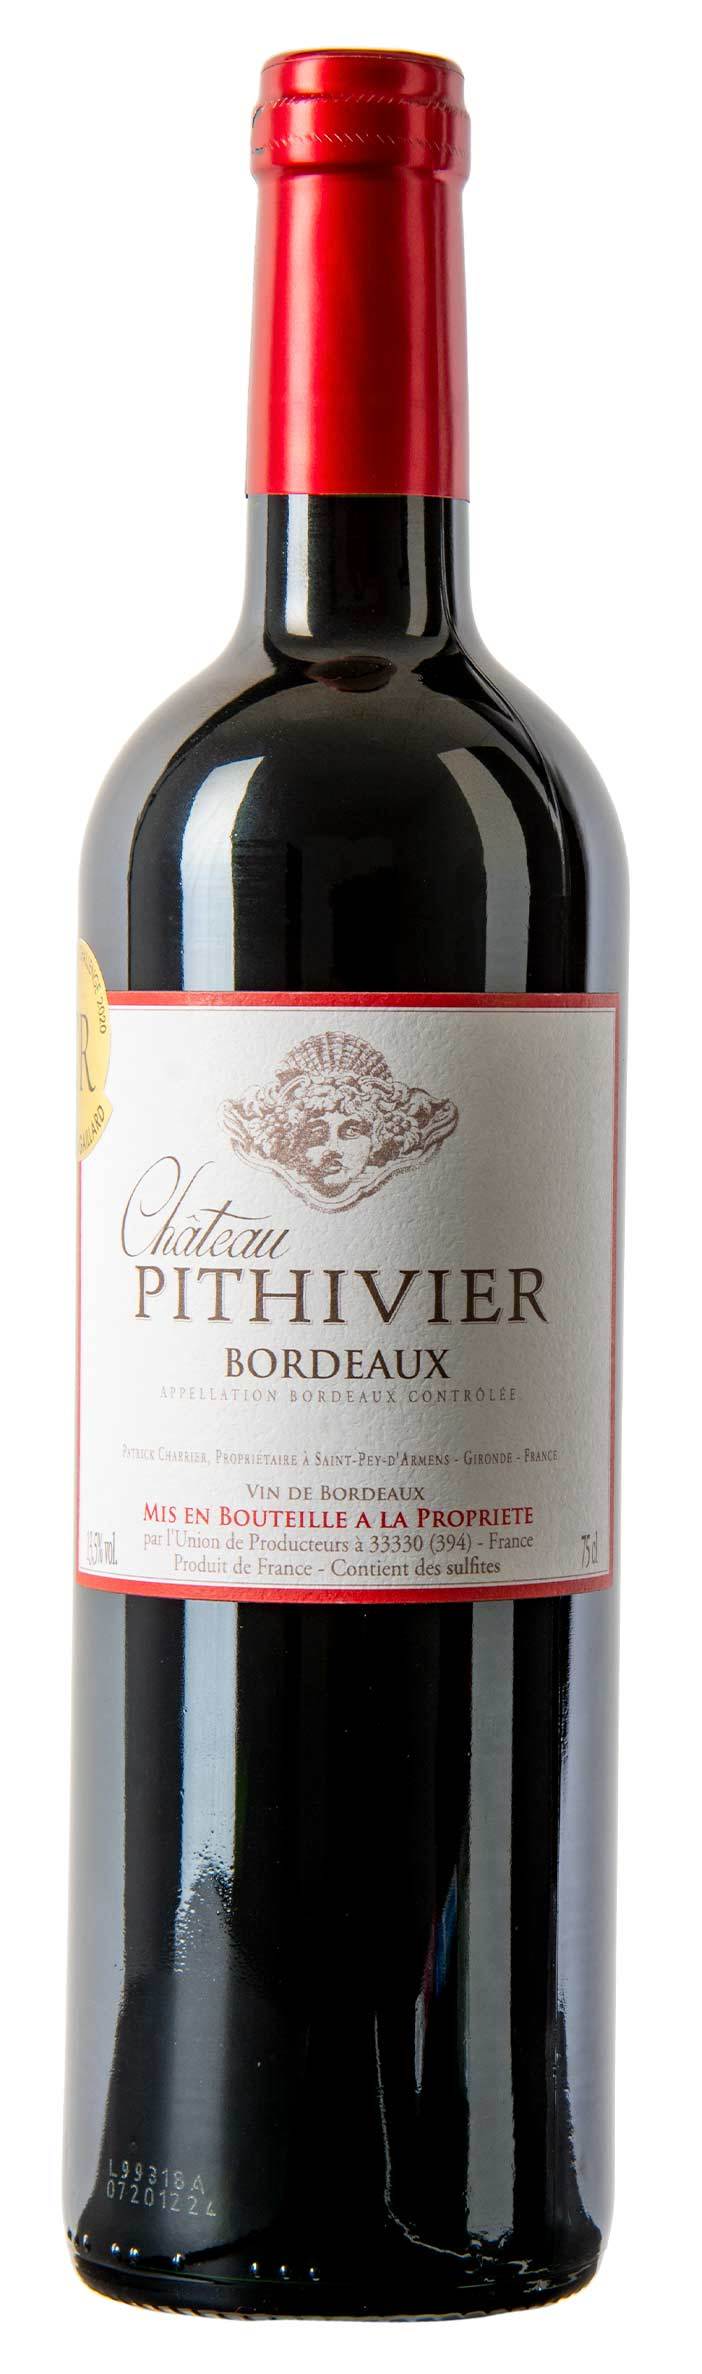 Château Pithivier